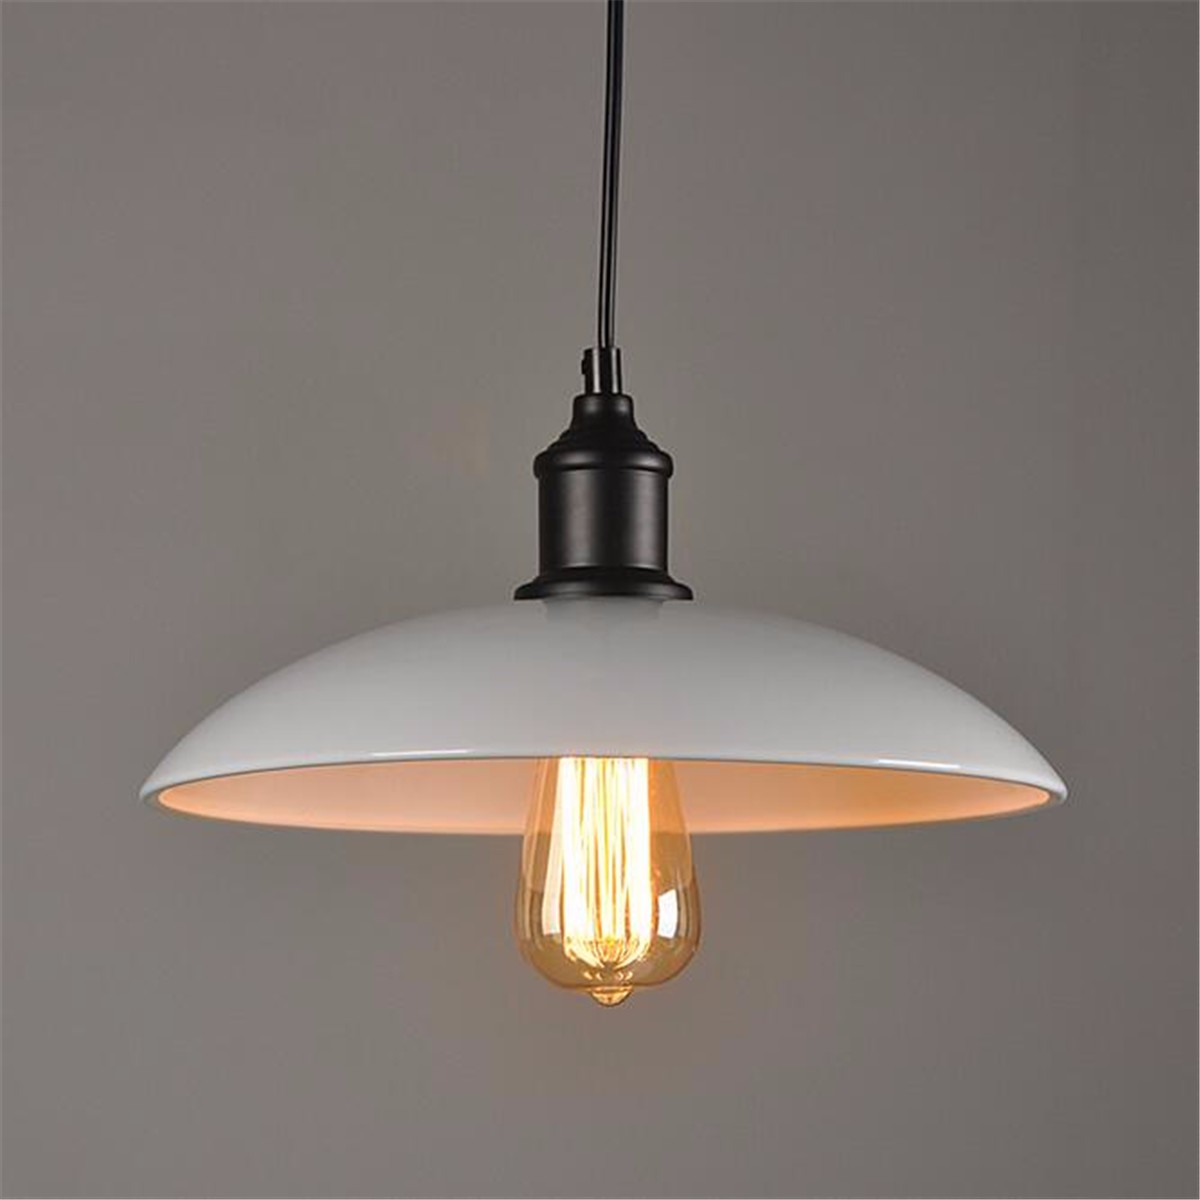 Vintage-Home-Room-Ceiling-Light-Pendant-Lamp-Fixture-Chandelier-E27-Bulb-Lampshade-Decor-1118064-5